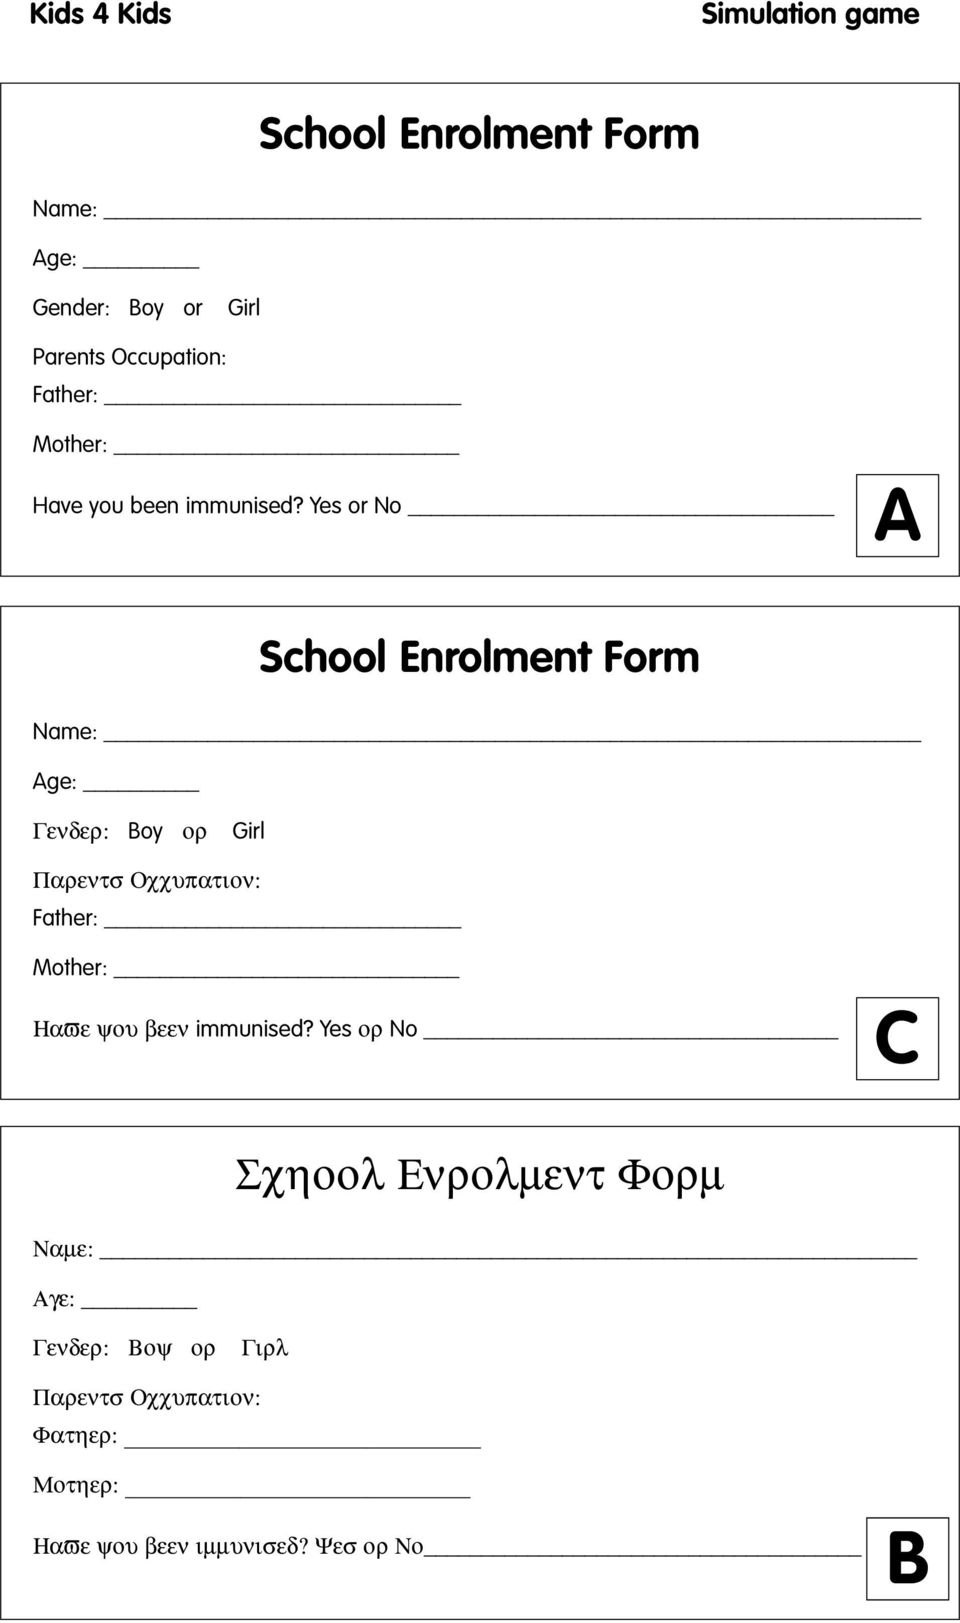 Yes or No A School Enrolment Form Γενδερ: oy ορ Girl Παρεντσ Οχχυπατιον: Father: